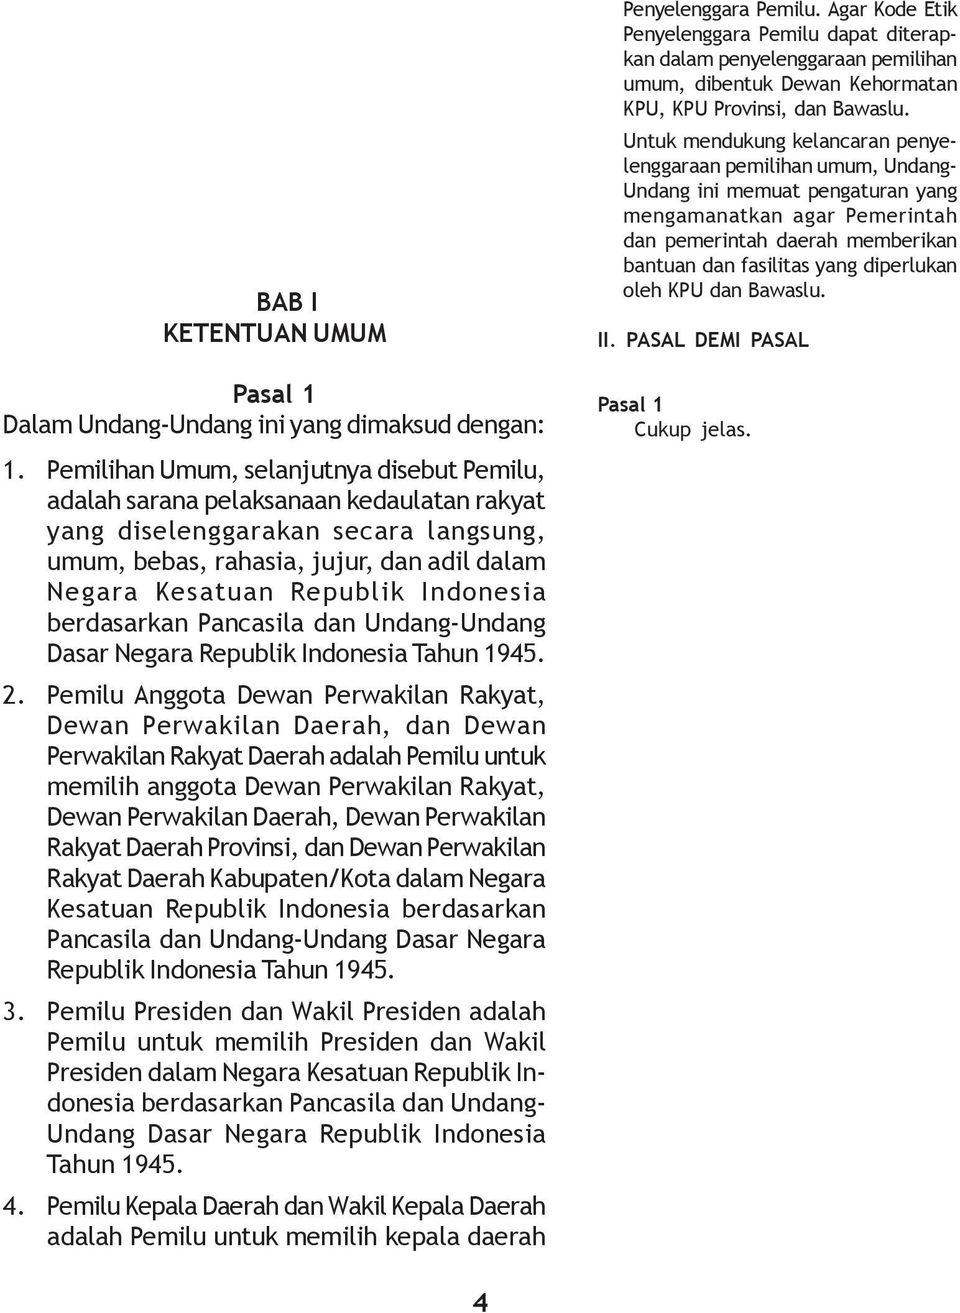 Indonesia berdasarkan Pancasila dan Undang-Undang Dasar Negara Republik Indonesia Tahun 945. 2.